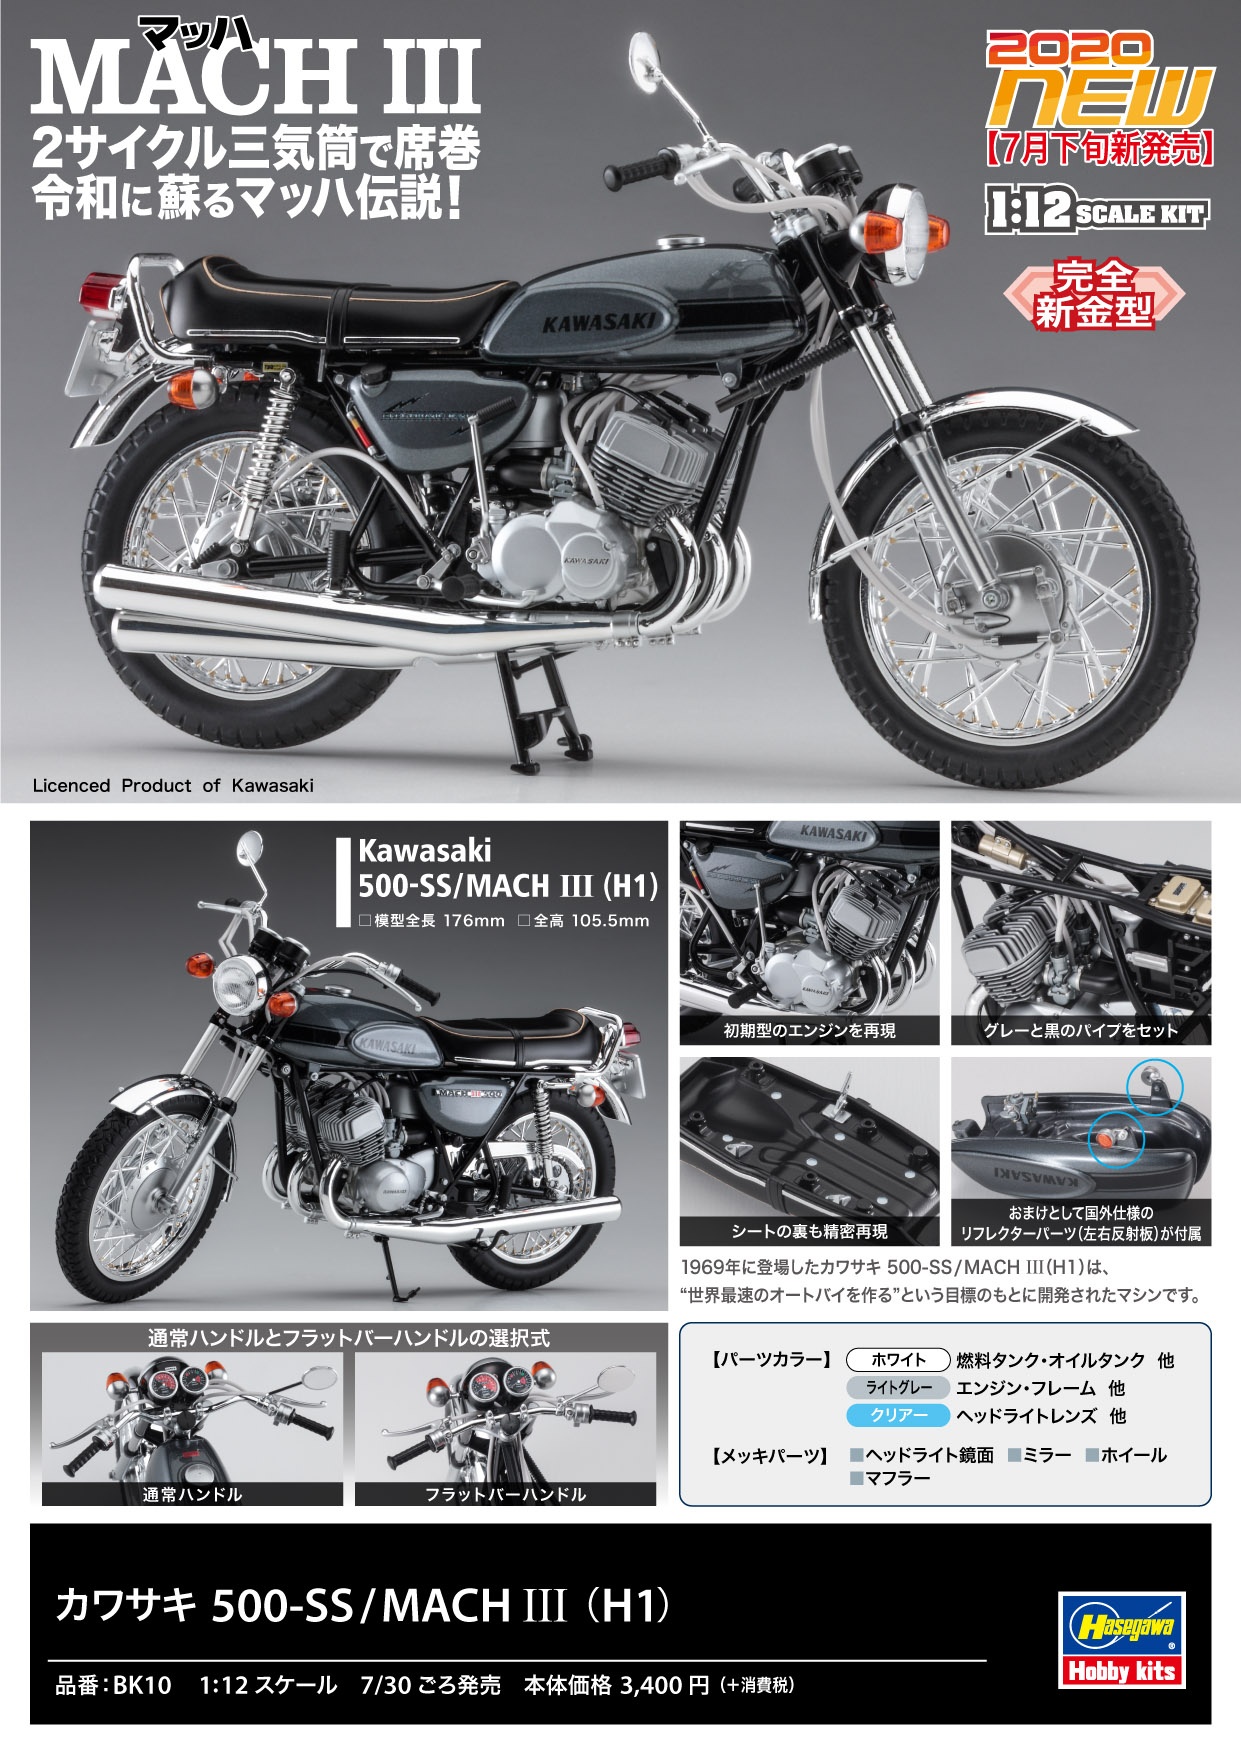 Hasegawa 1/12 Bike Series Kawasaki 500-SS MachIII H1 Plastic model BK10 